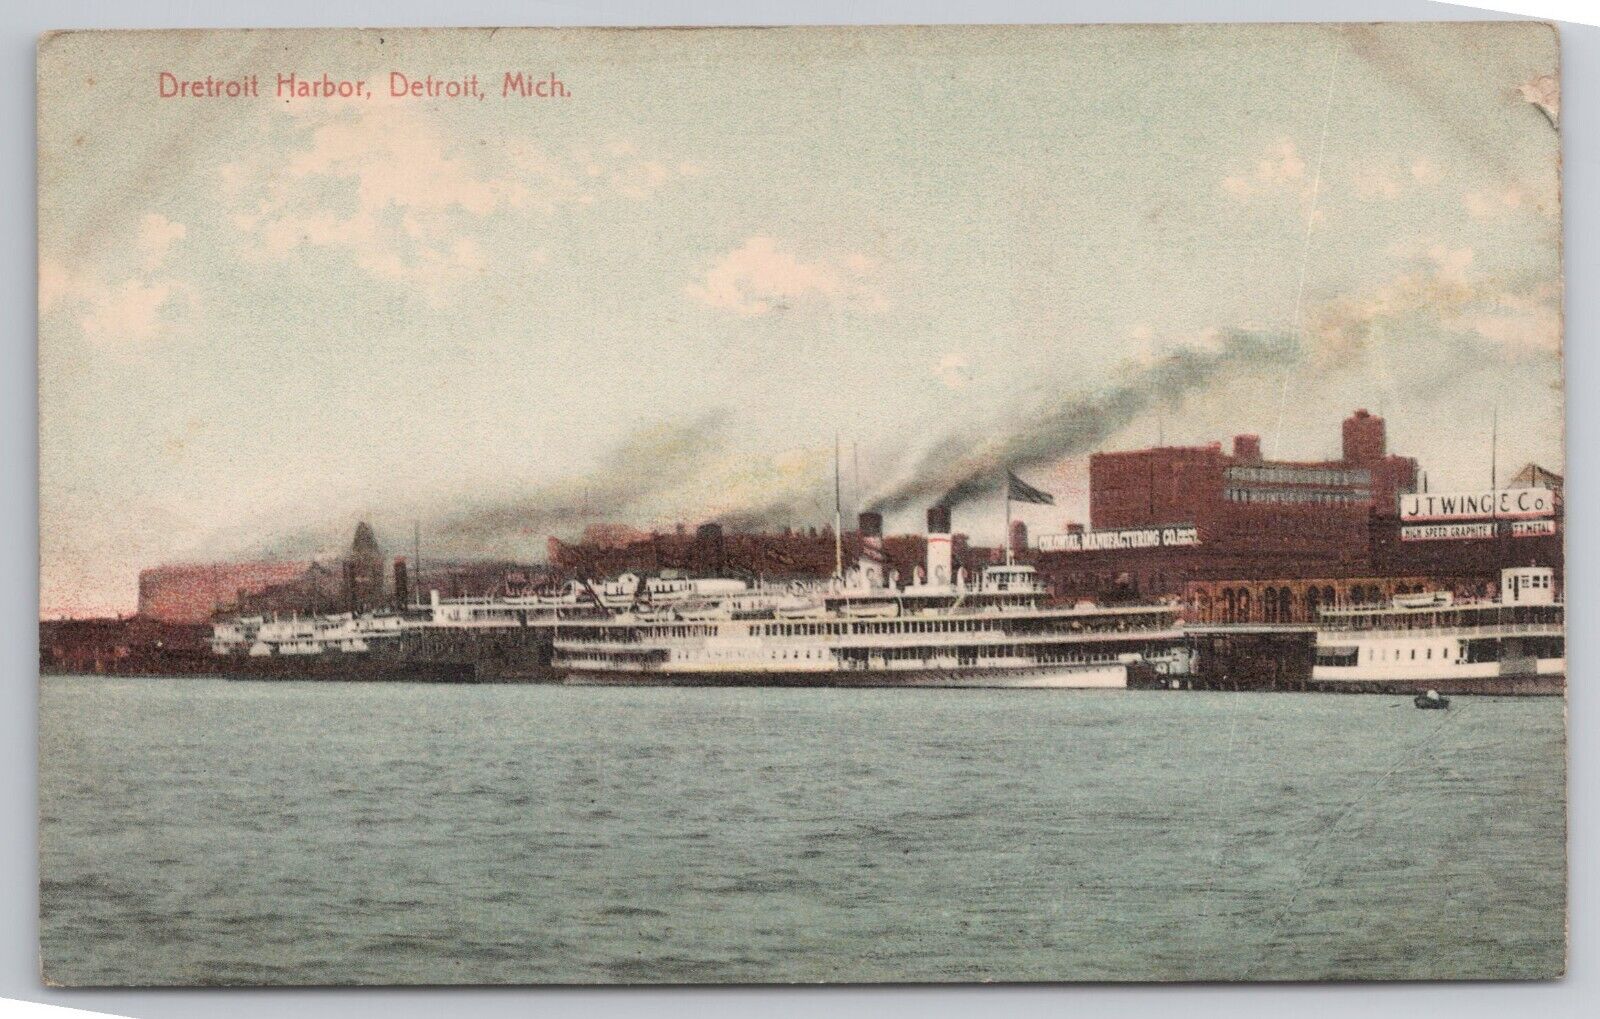 1907-15 Postcard Detroit Harbor Michigan MI Ships Colonial Mfg. Co J T Wing